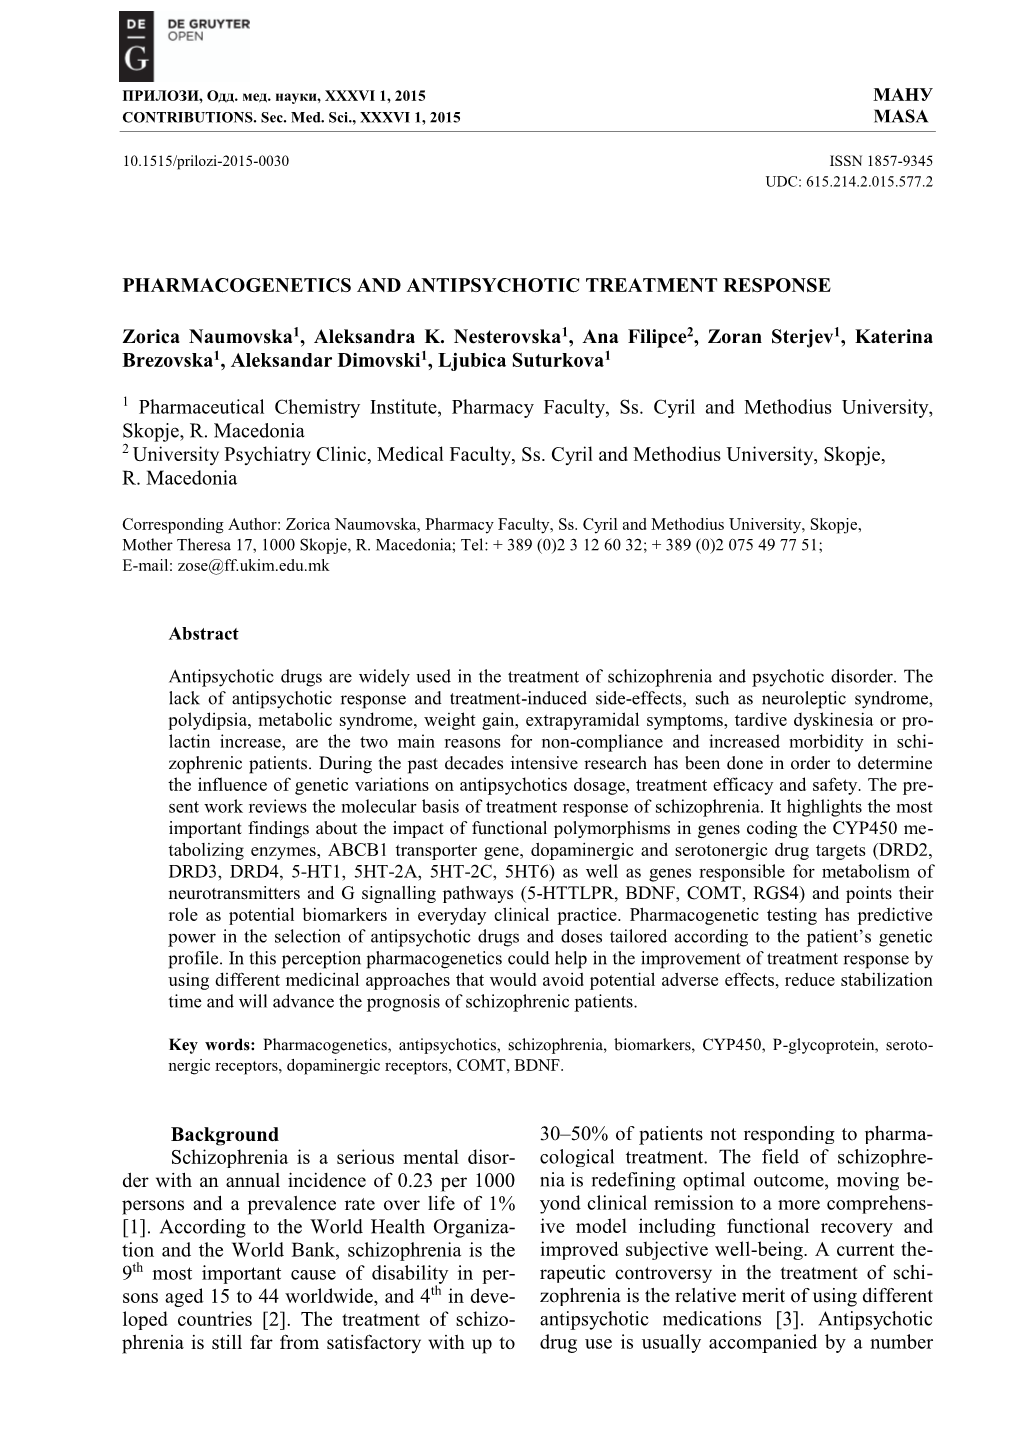 PHARMACOGENETICS and ANTIPSYCHOTIC TREATMENT RESPONSE Zorica Naumovska1, Aleksandra K. Nesterovska1, Ana Filipce2, Zoran Sterje